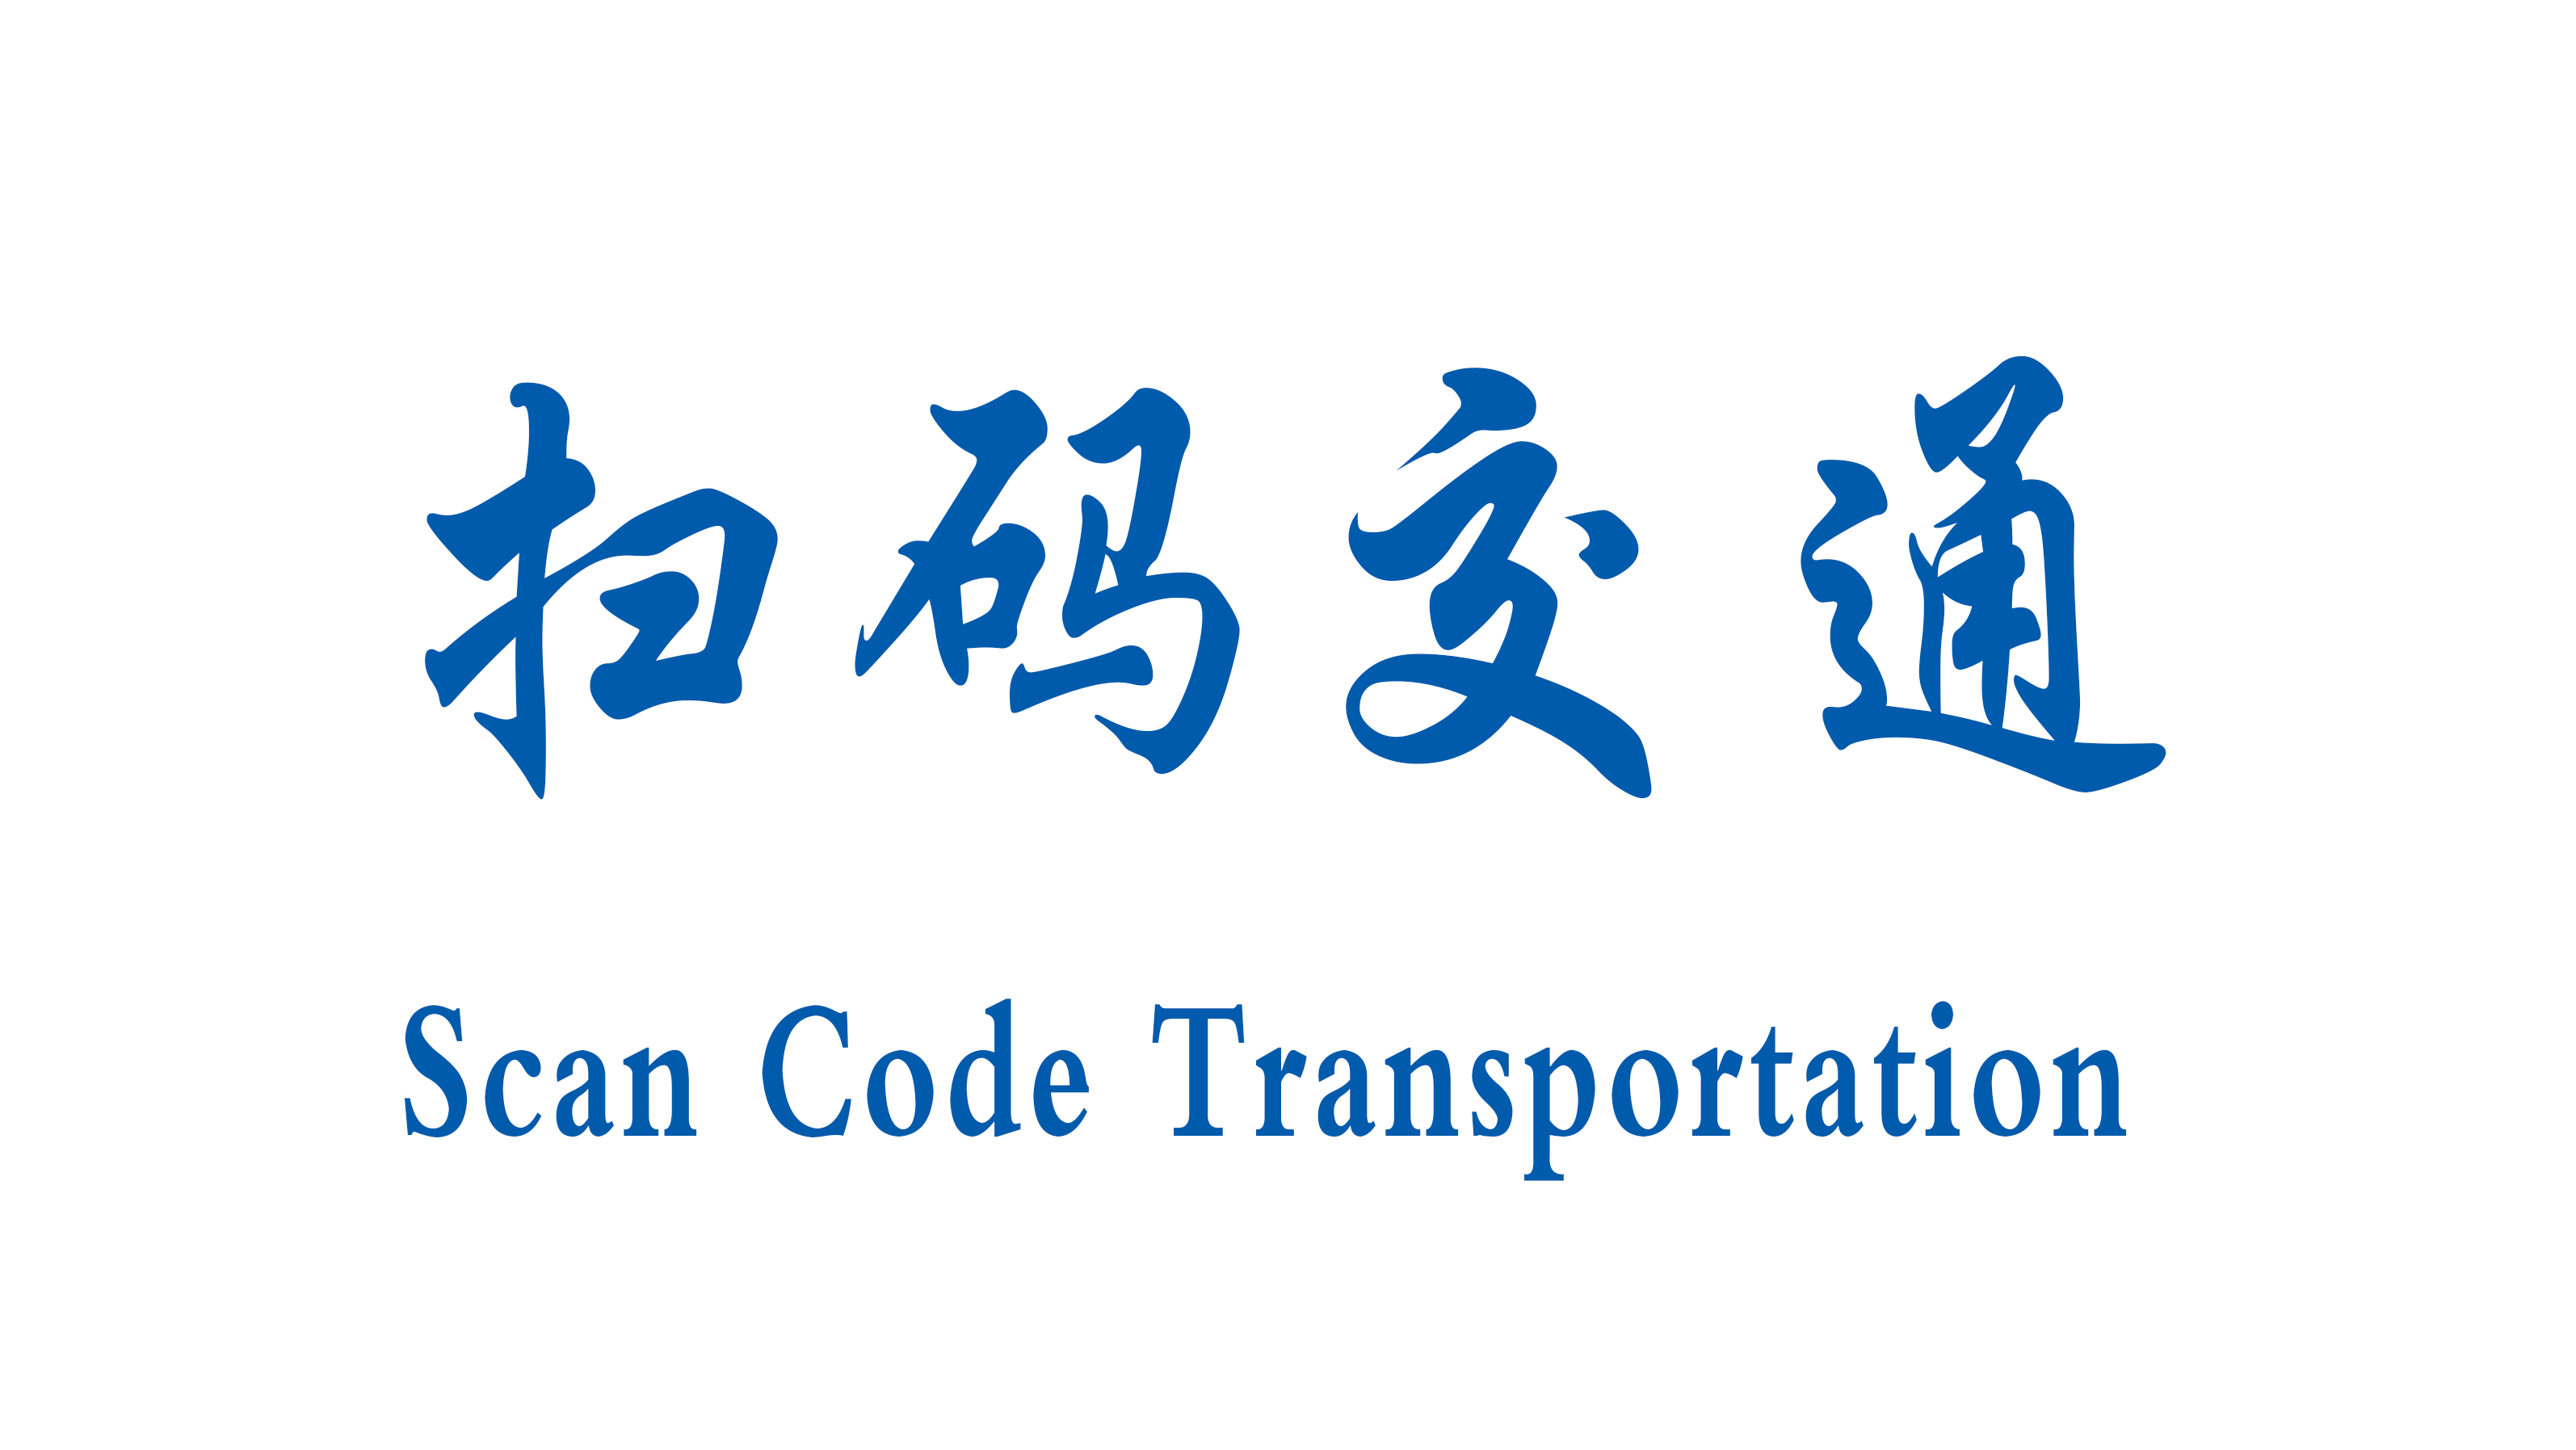 Scan Code Transportation